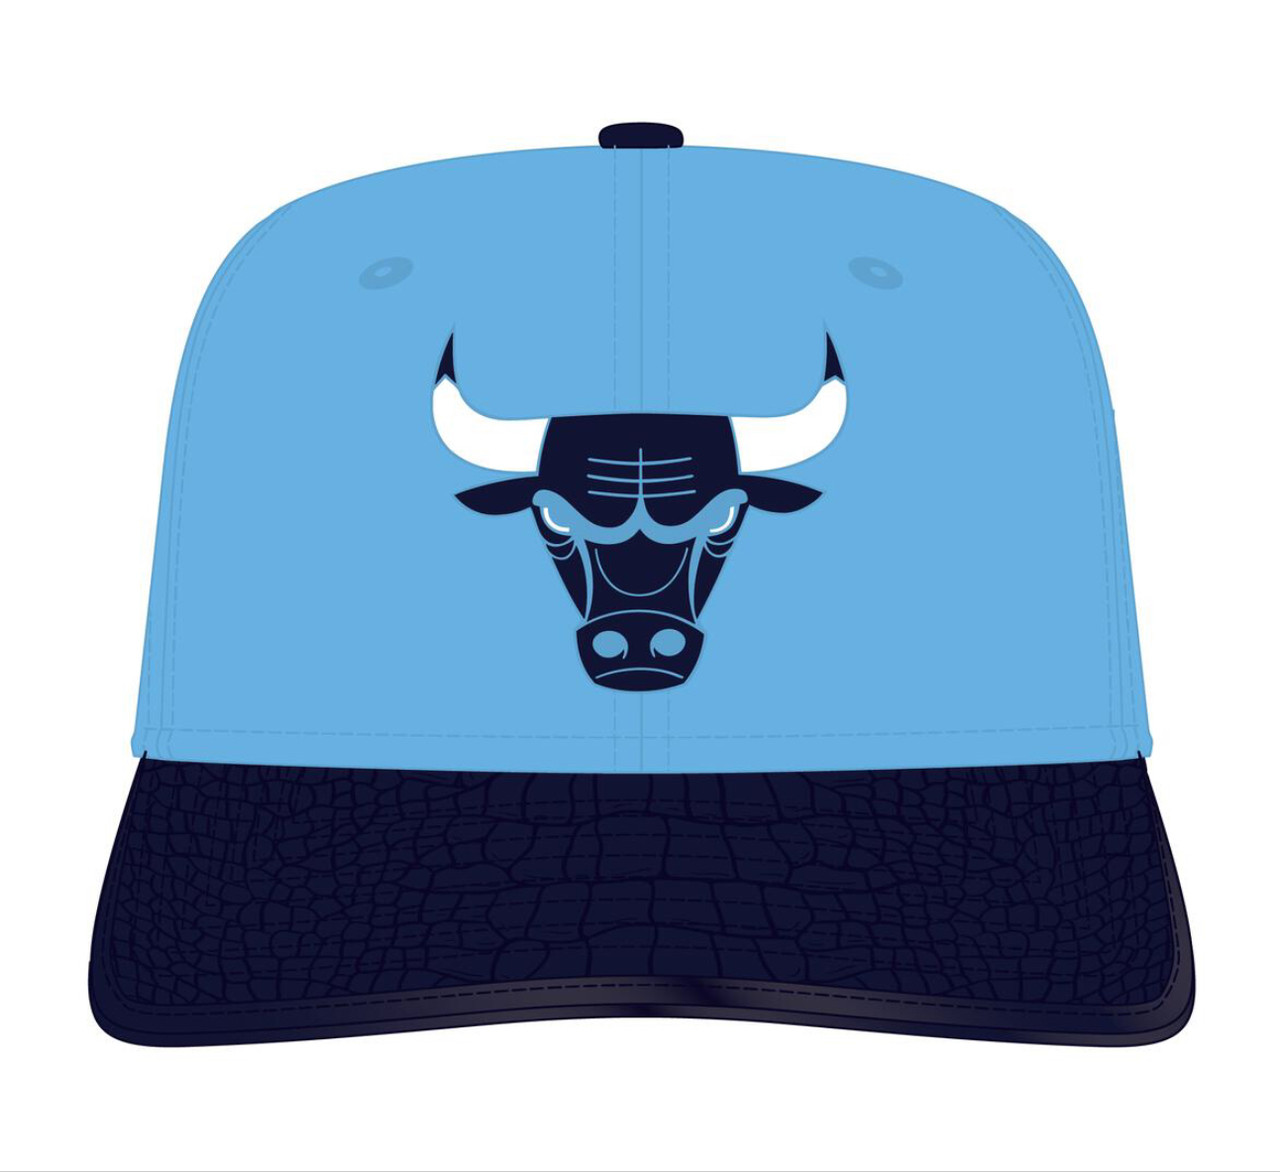 Chicago Bulls, blue bulls HD wallpaper